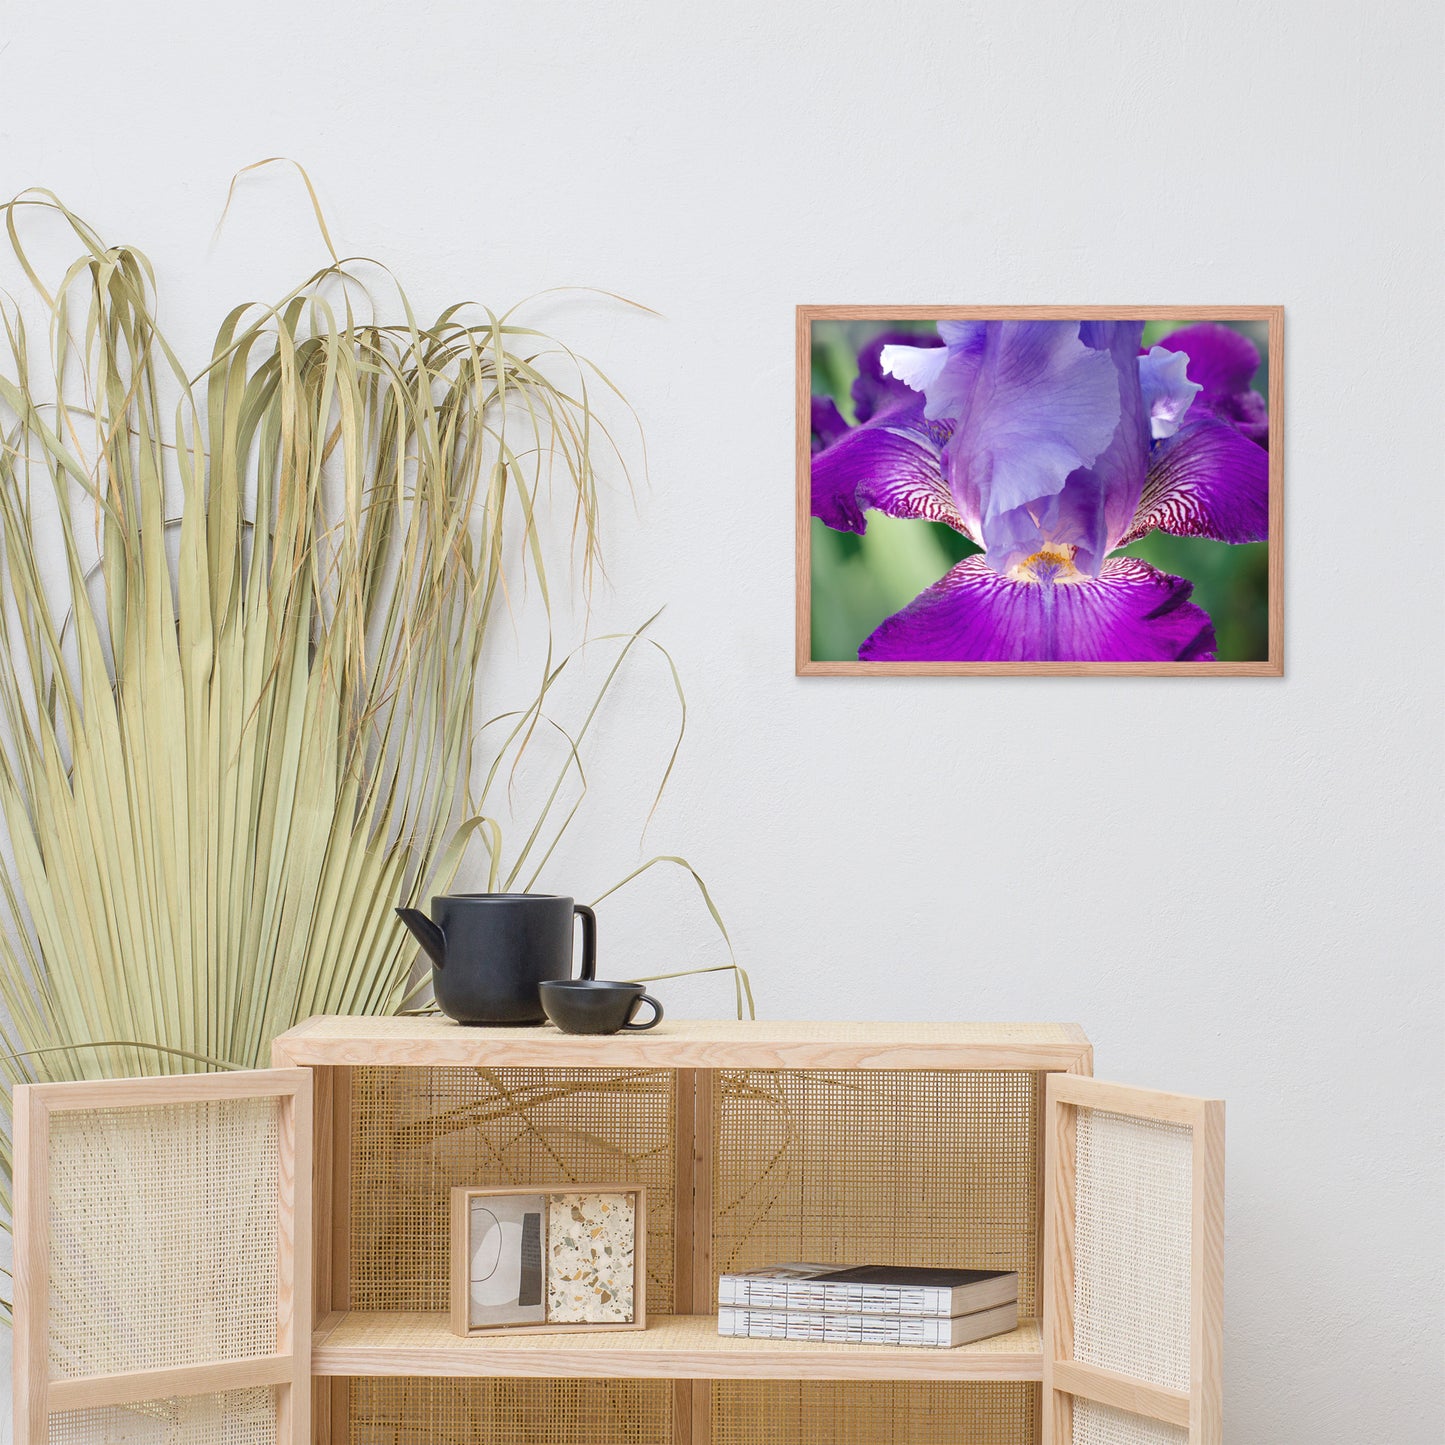 Wall Art For Bedroom Amazon: Glowing Iris - Floral / Botanical / Nature Photo Framed Wall Art Print - Artwork - Wall Decor - Modern Home Decor